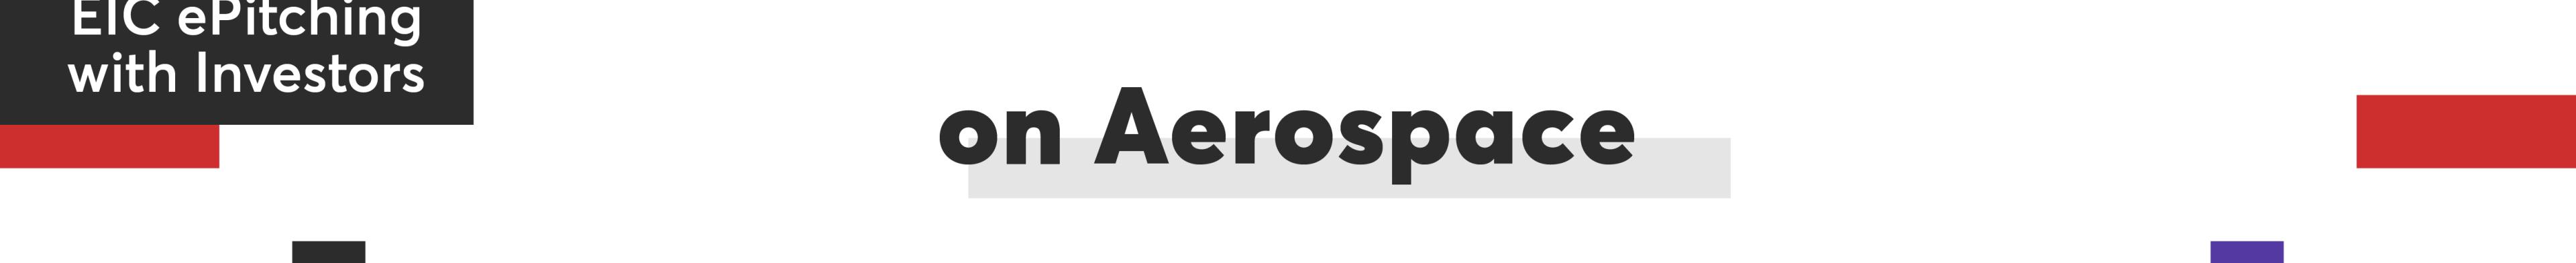 eic_epitching_investors_aerospace_community_banner.jpg